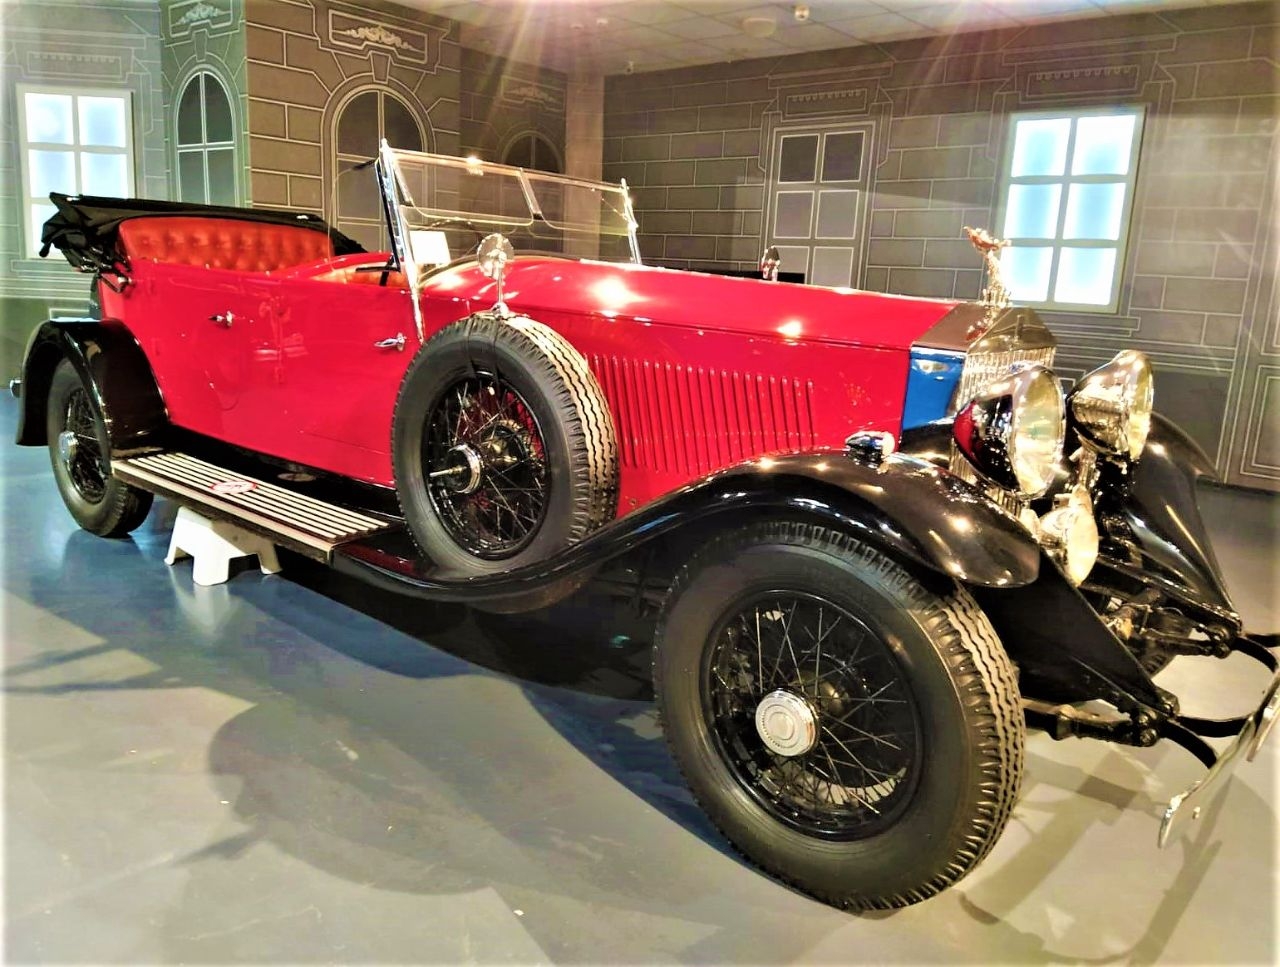 Коллекция автомобилей в музее Черномырдина / Collection of cars in the Chernomyrdin Museum